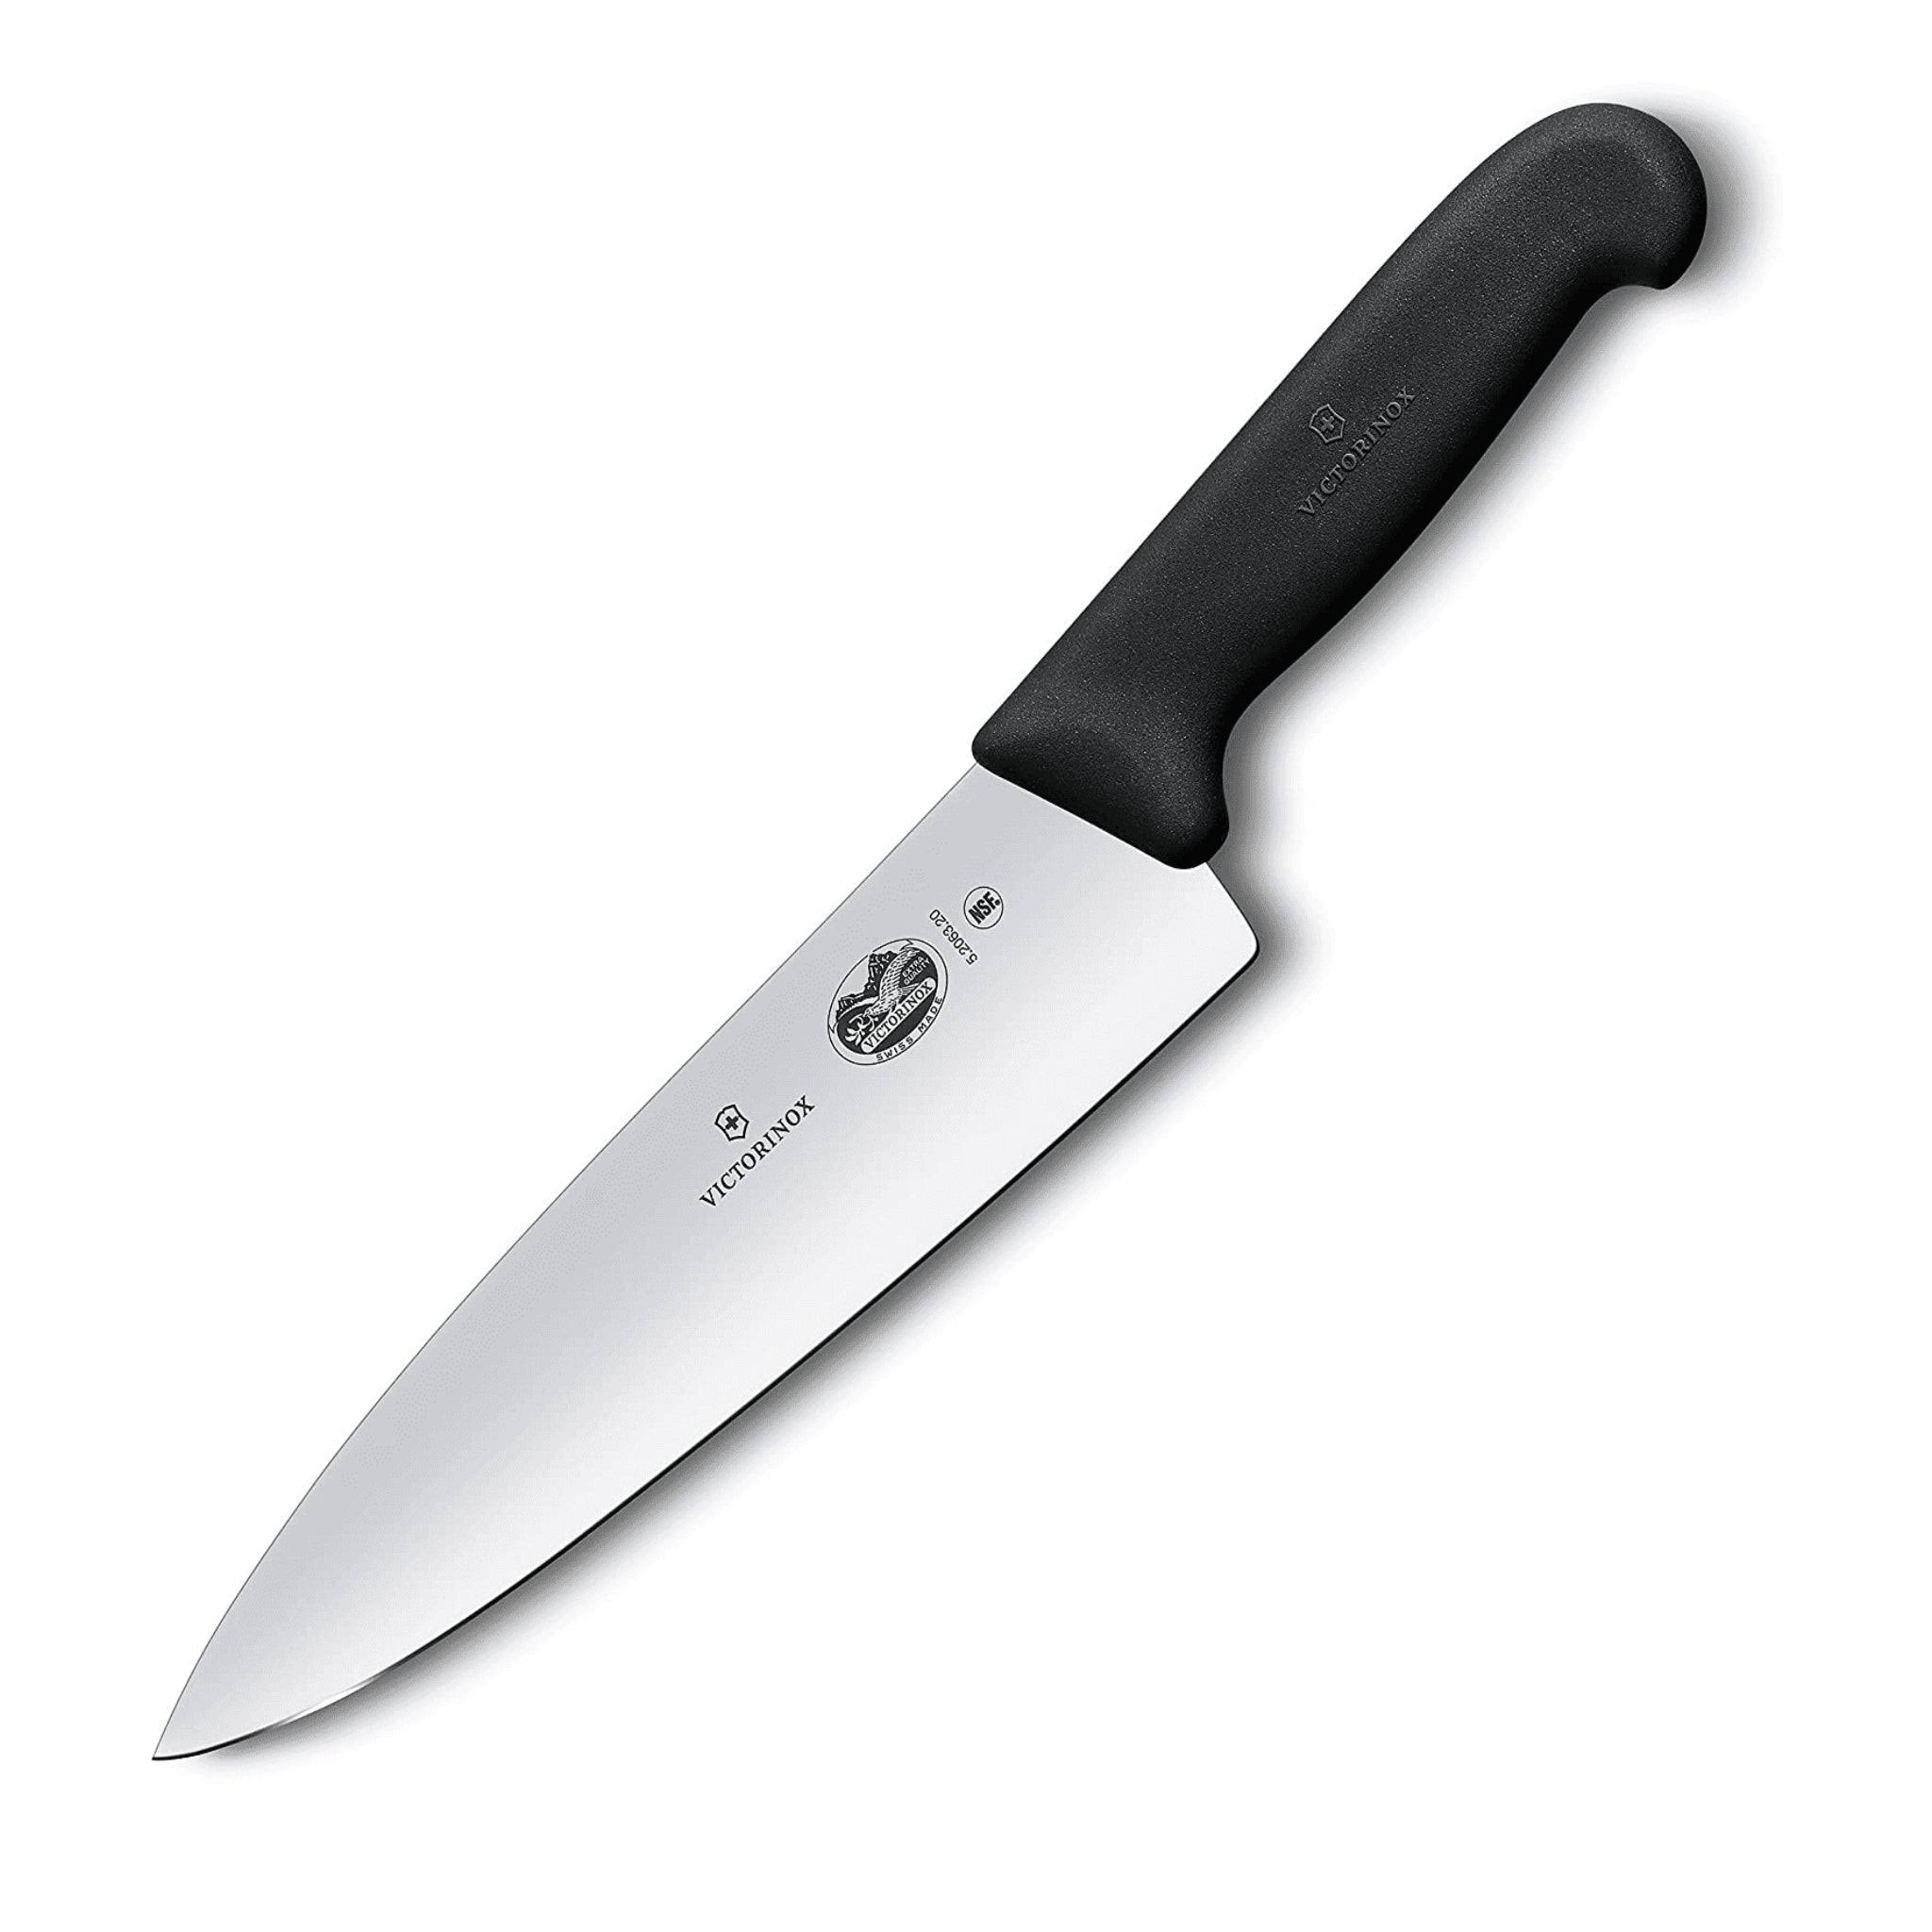 Victorinox Chef Knife - 20cm